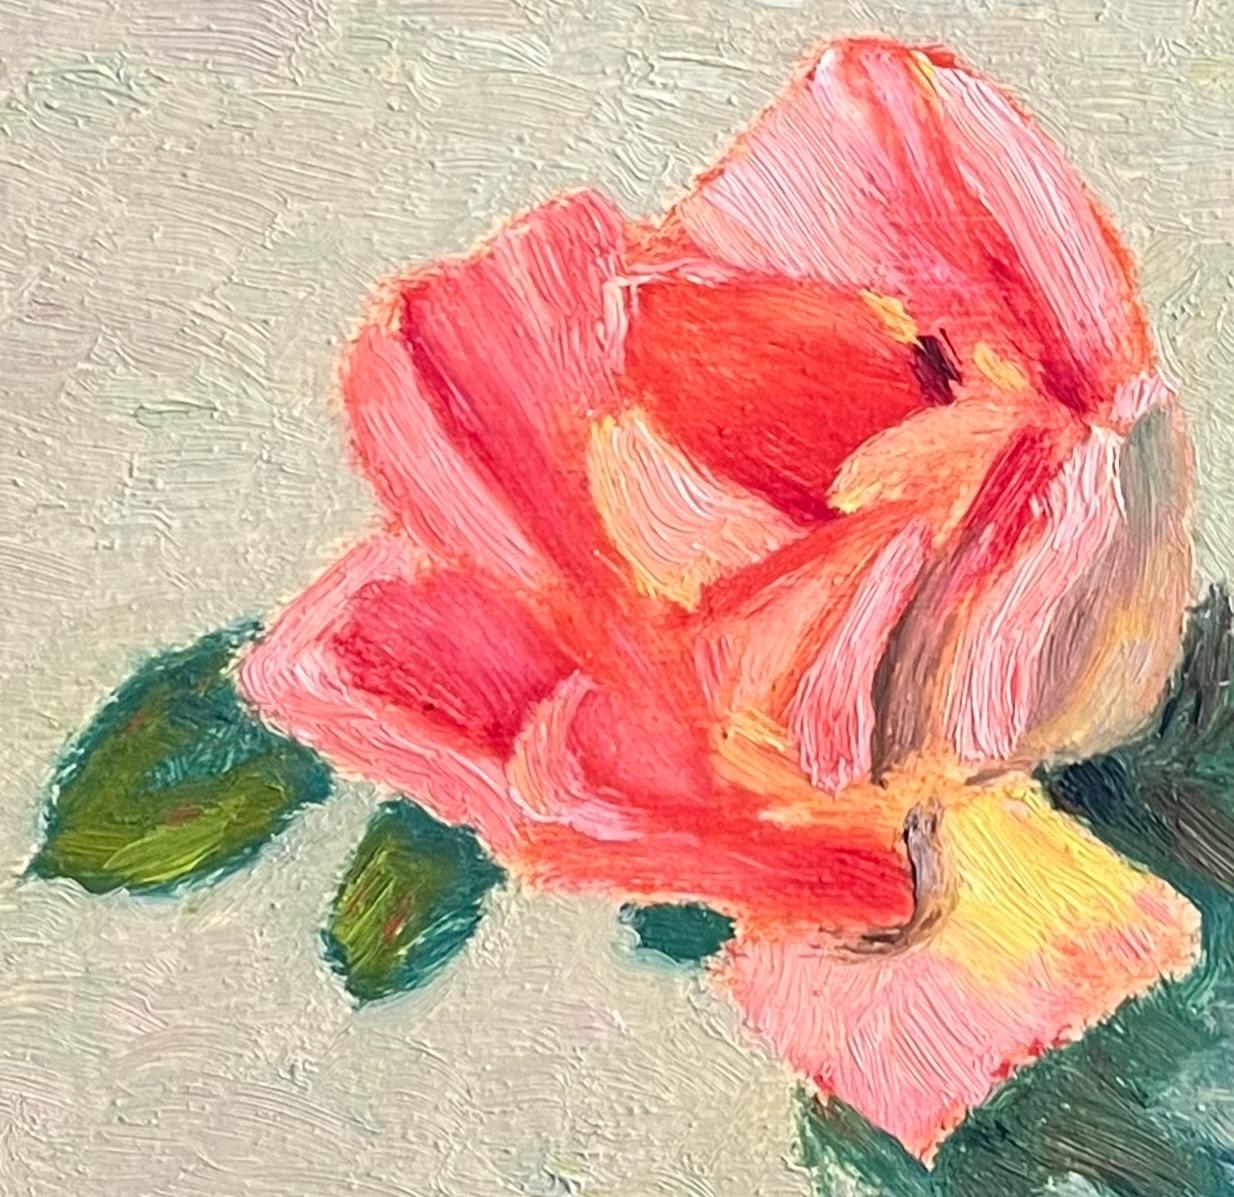 Rose in Blumenvase öl ptg Rot, Rosa & Gelb - Santa Barbara, Kalifornien 0-202 (Amerikanischer Impressionismus), Painting, von Francis Draper Jr.